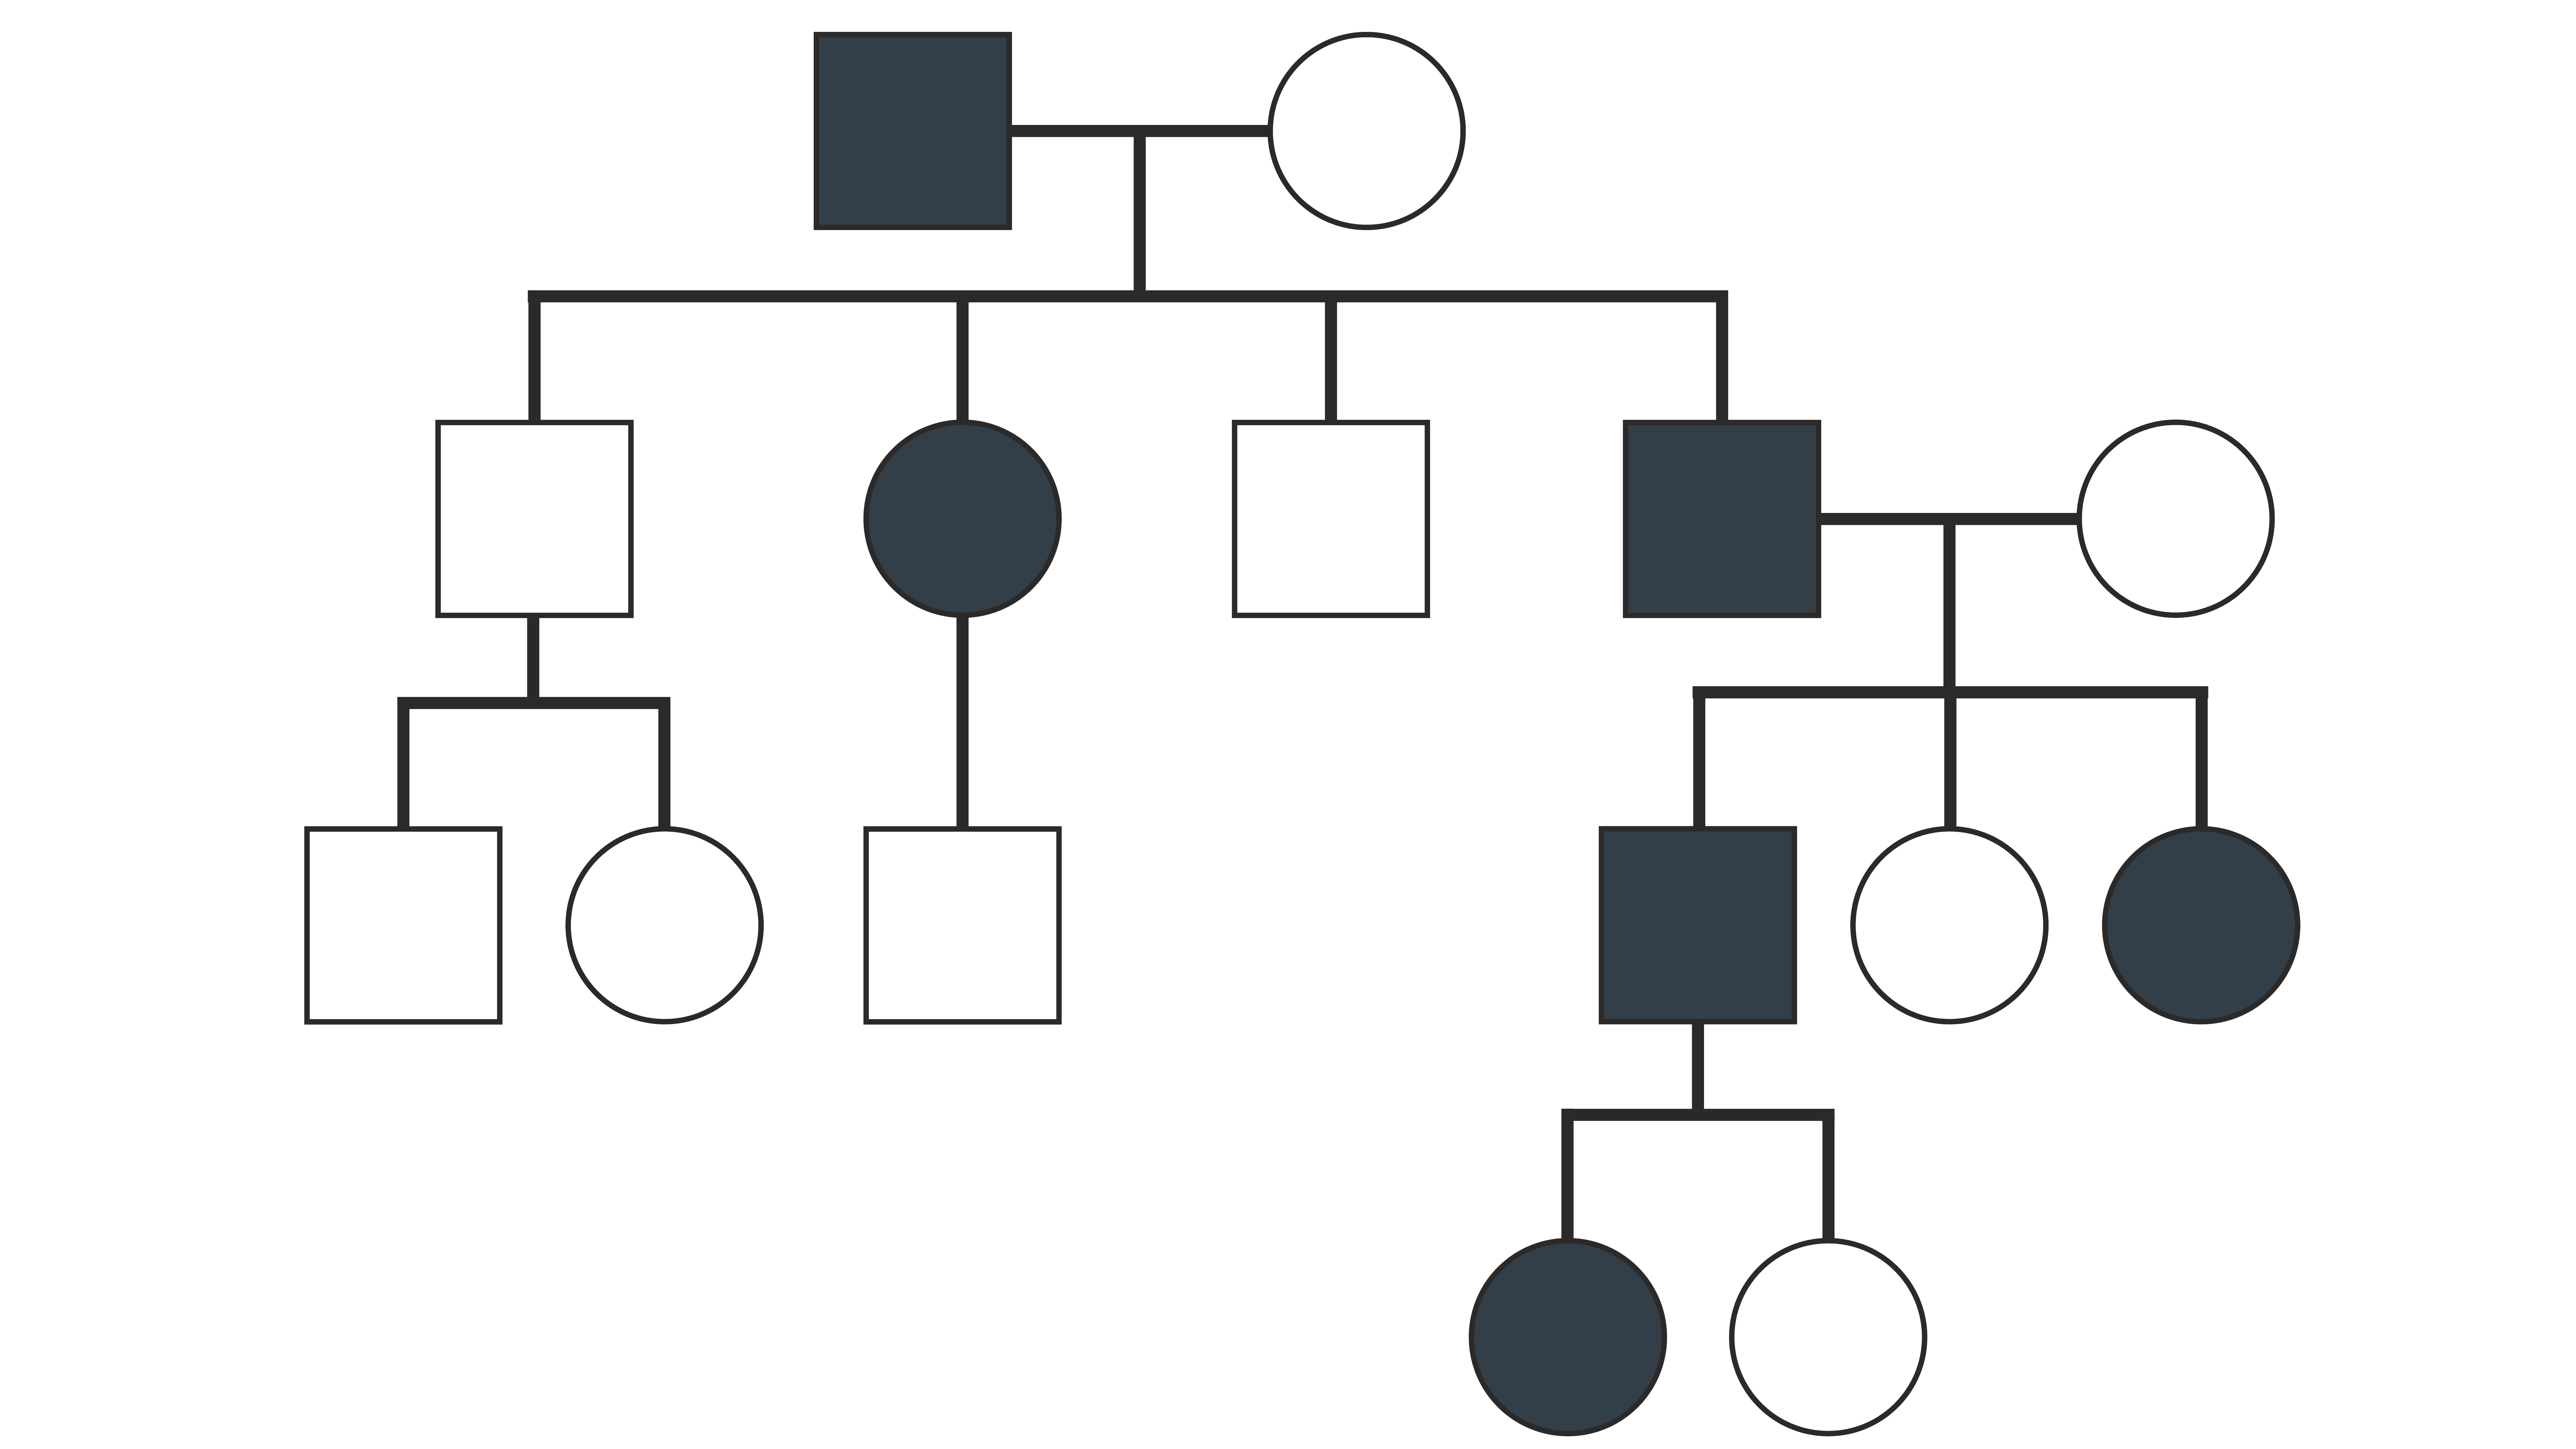 Autosomal dominant inheritance